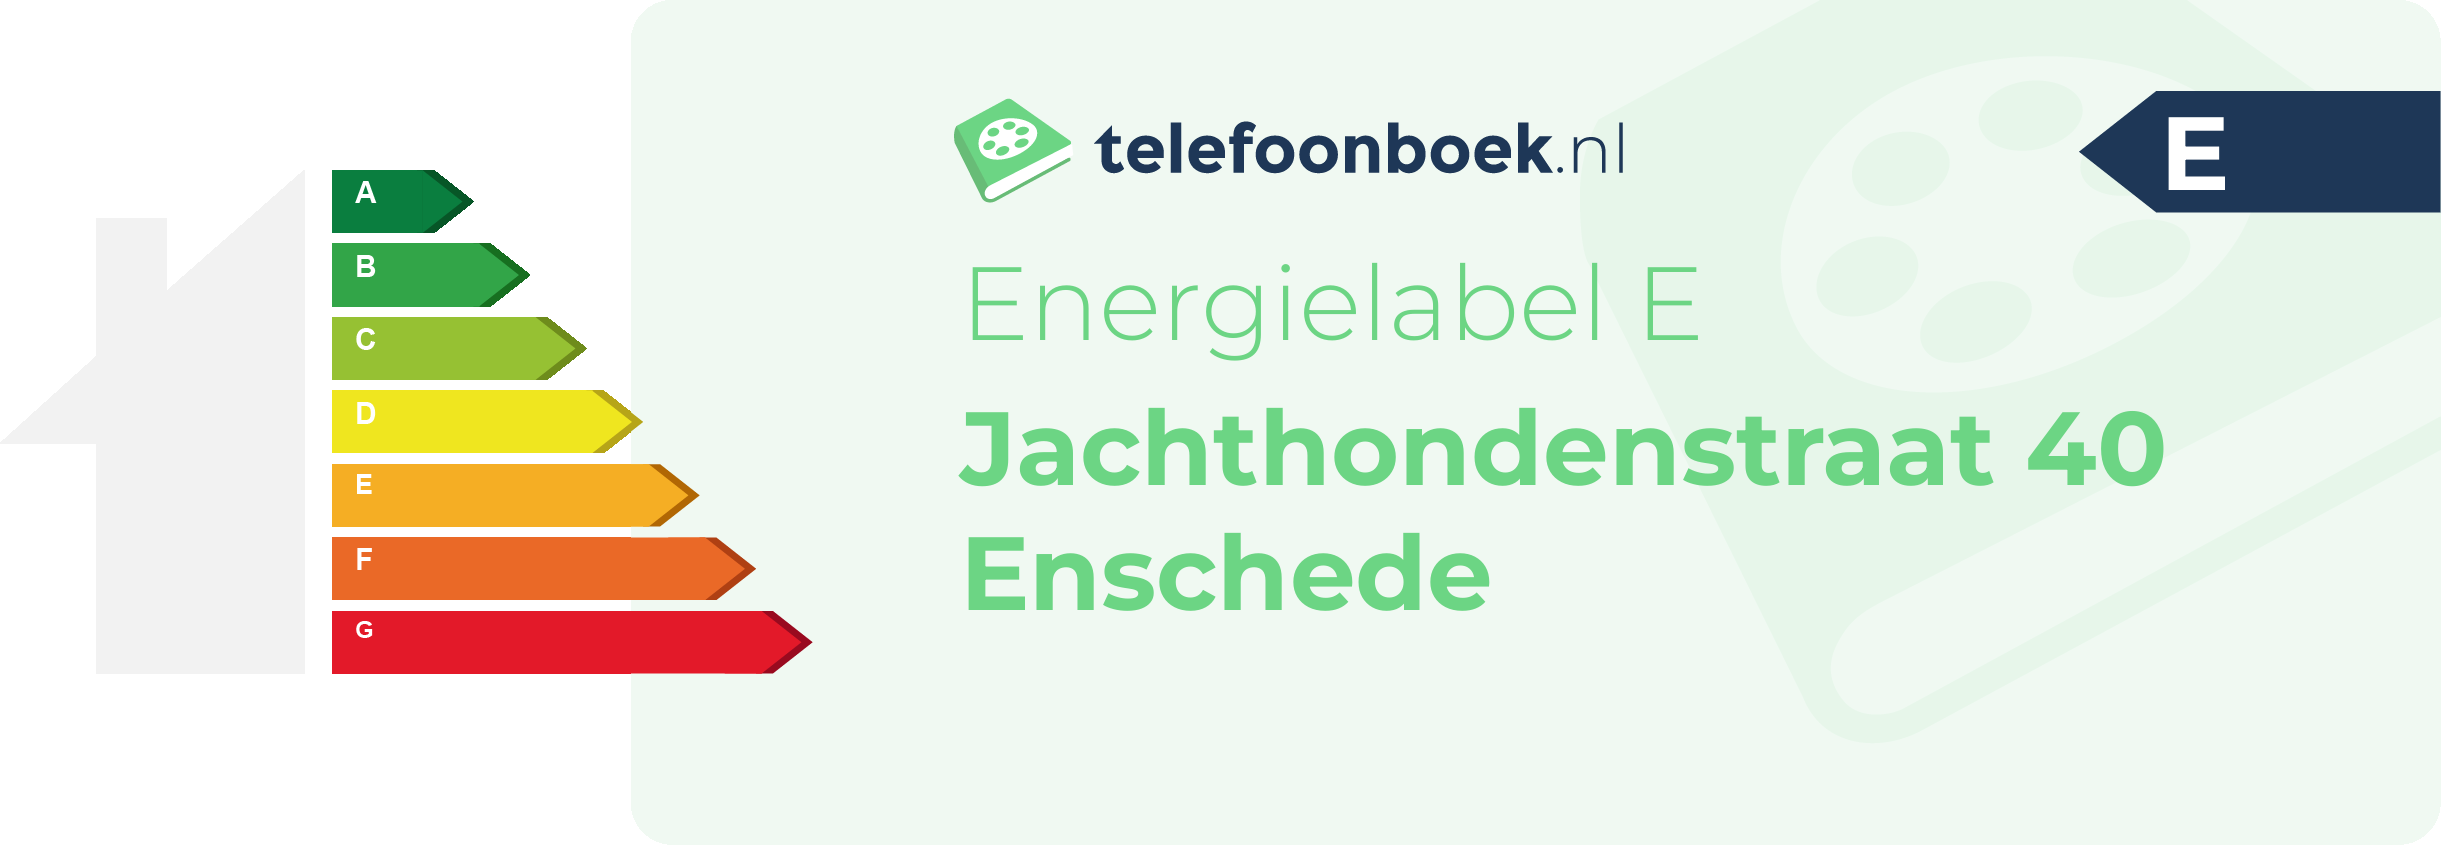 Energielabel Jachthondenstraat 40 Enschede